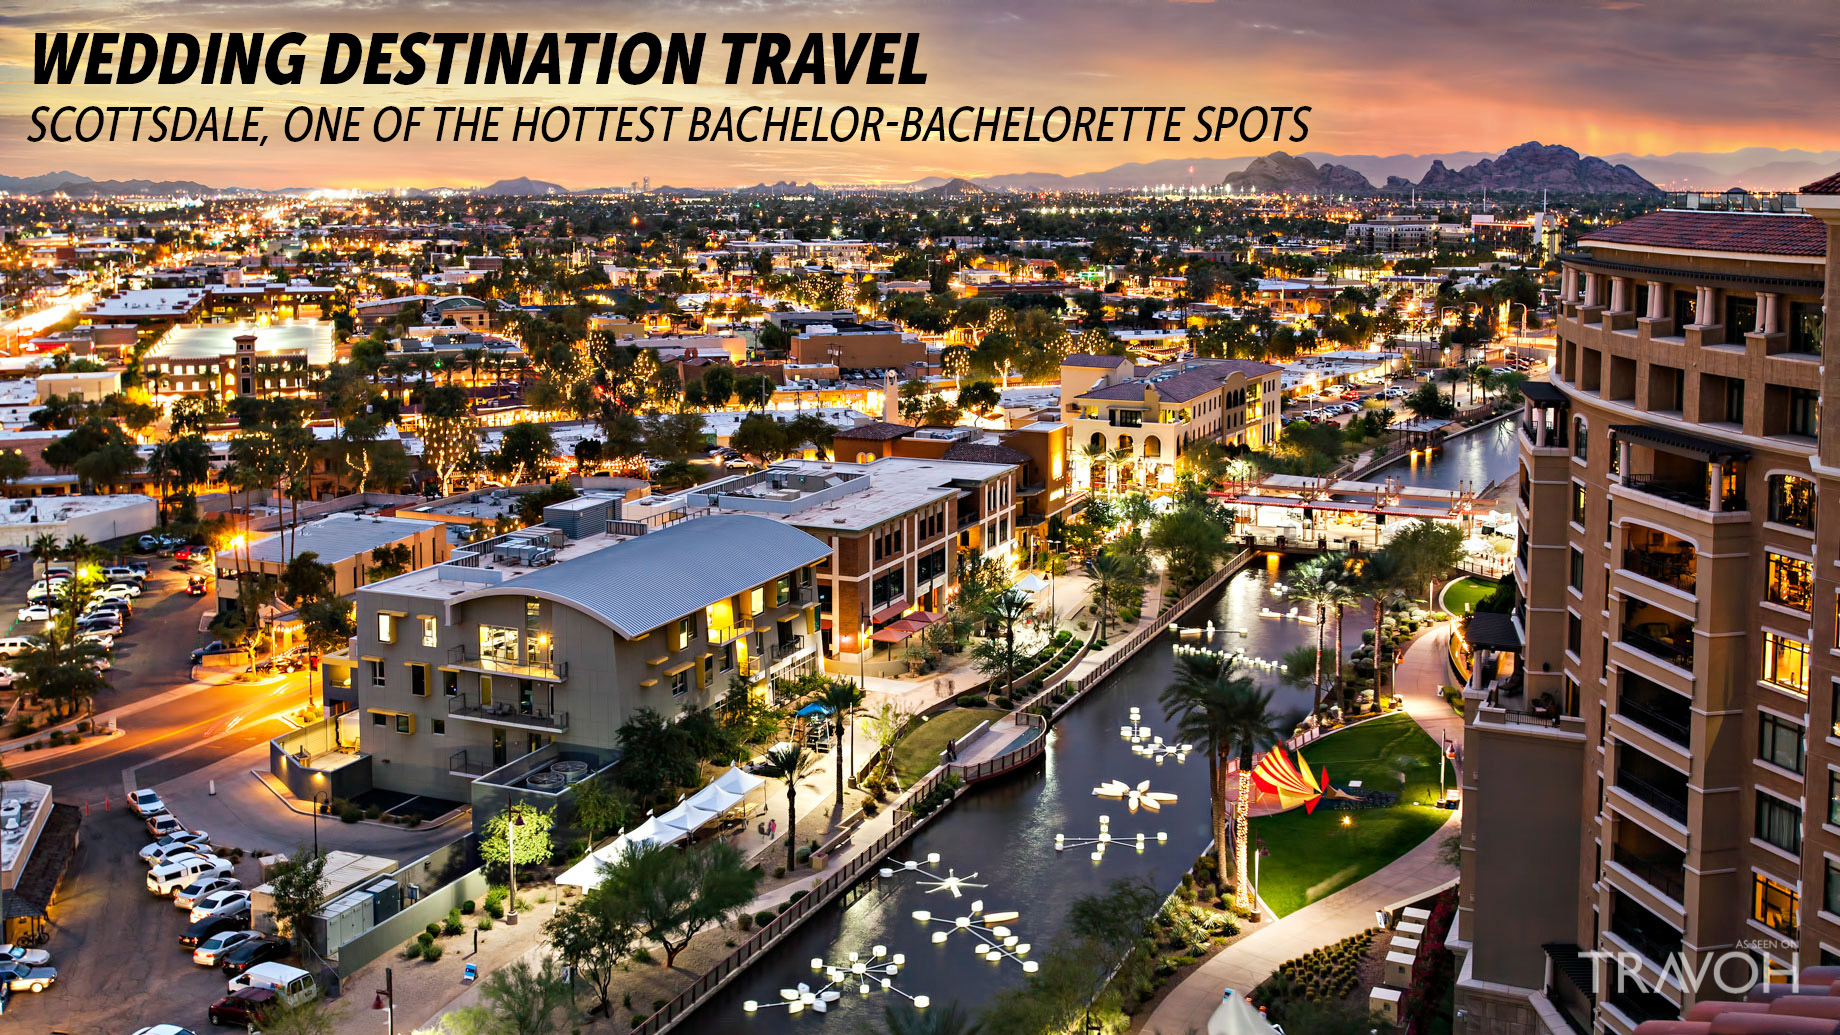 Wedding Destination Travel - Scottsdale, One of the Hottest Bachelor-Bachelorette Spots